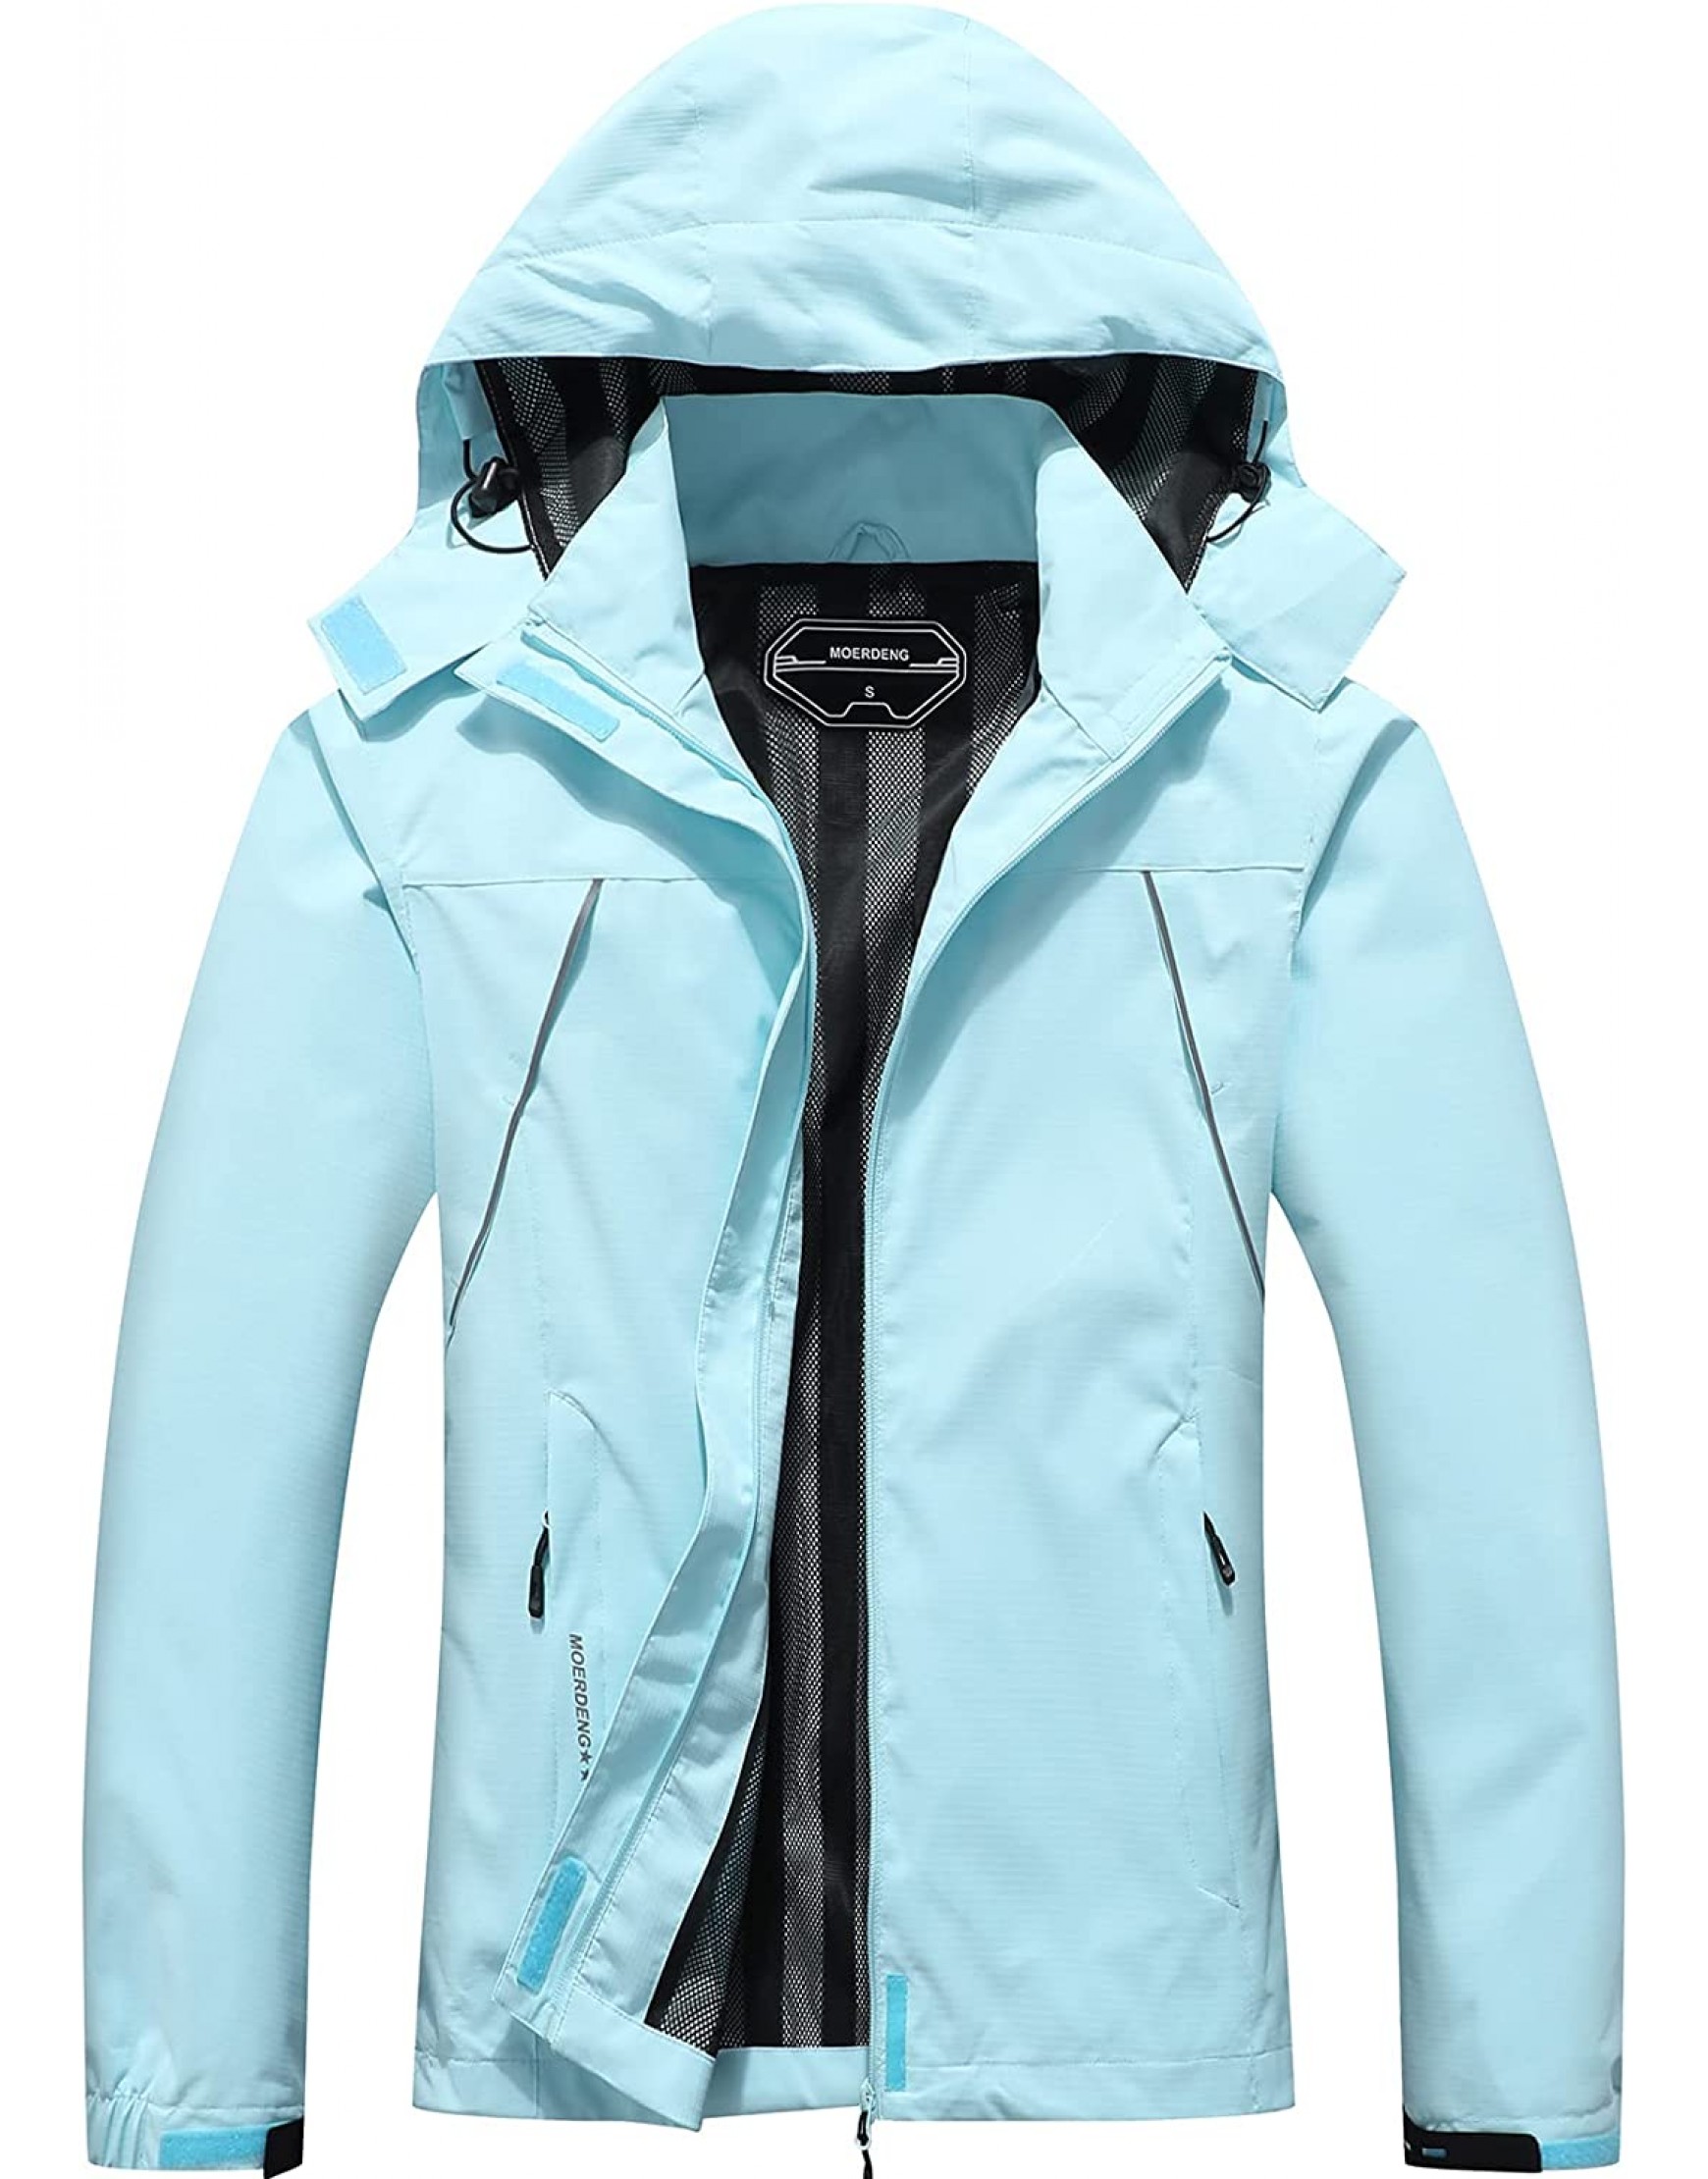 MOERDENG Women's Waterproof Rain Jacket Outdoor Lightweight Softshell ...